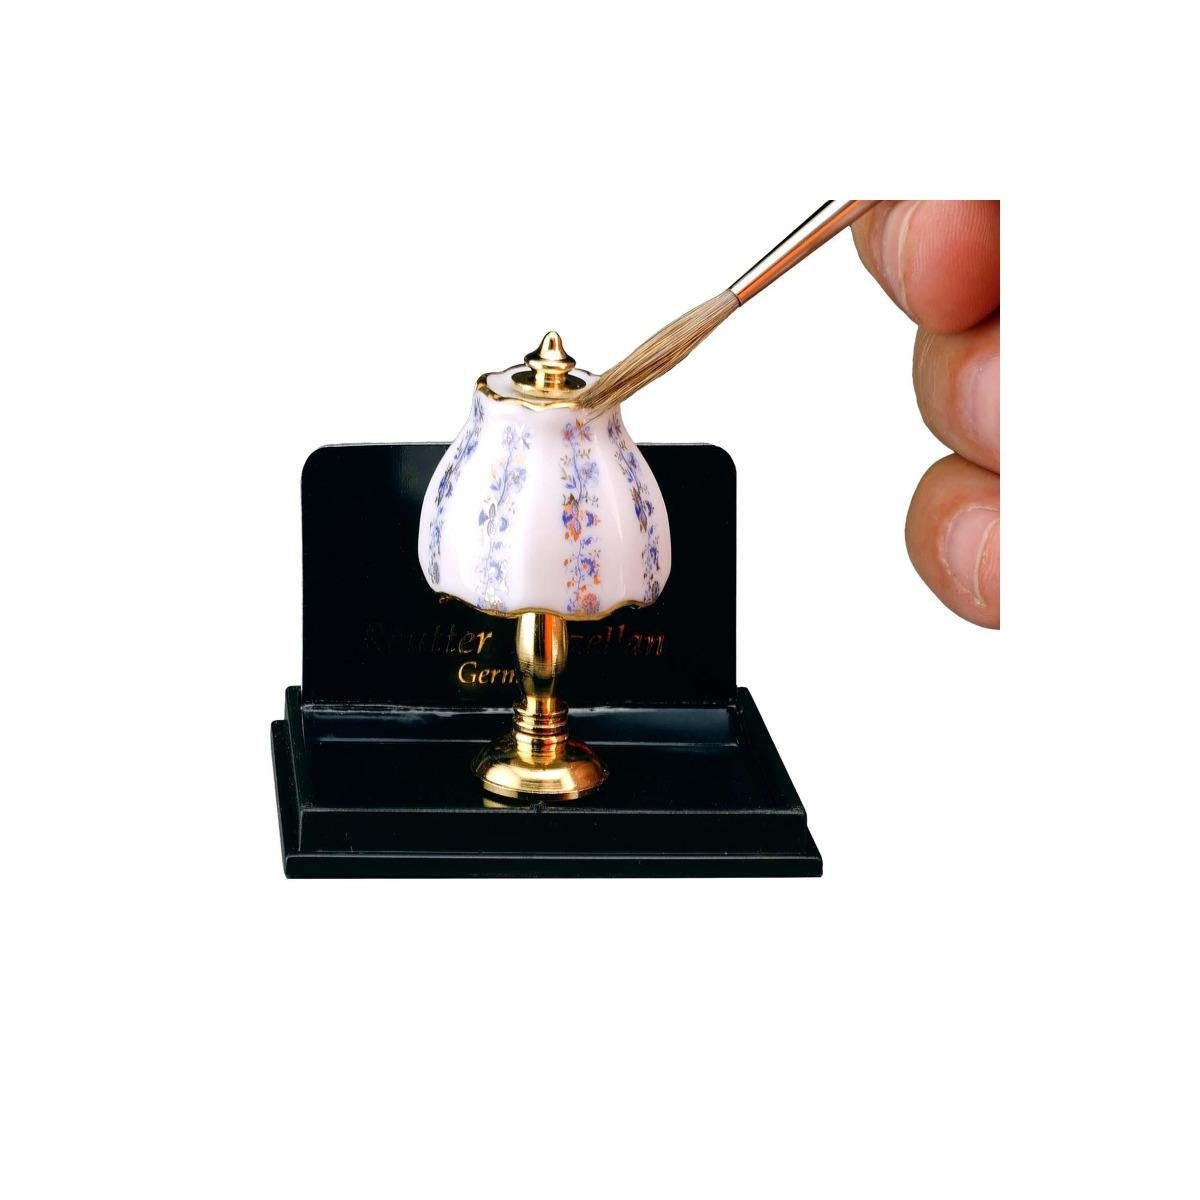 001.370/5 Tischlampe Porzellan Gold", - "Zwiebel Reutter Dekofigur Miniatur